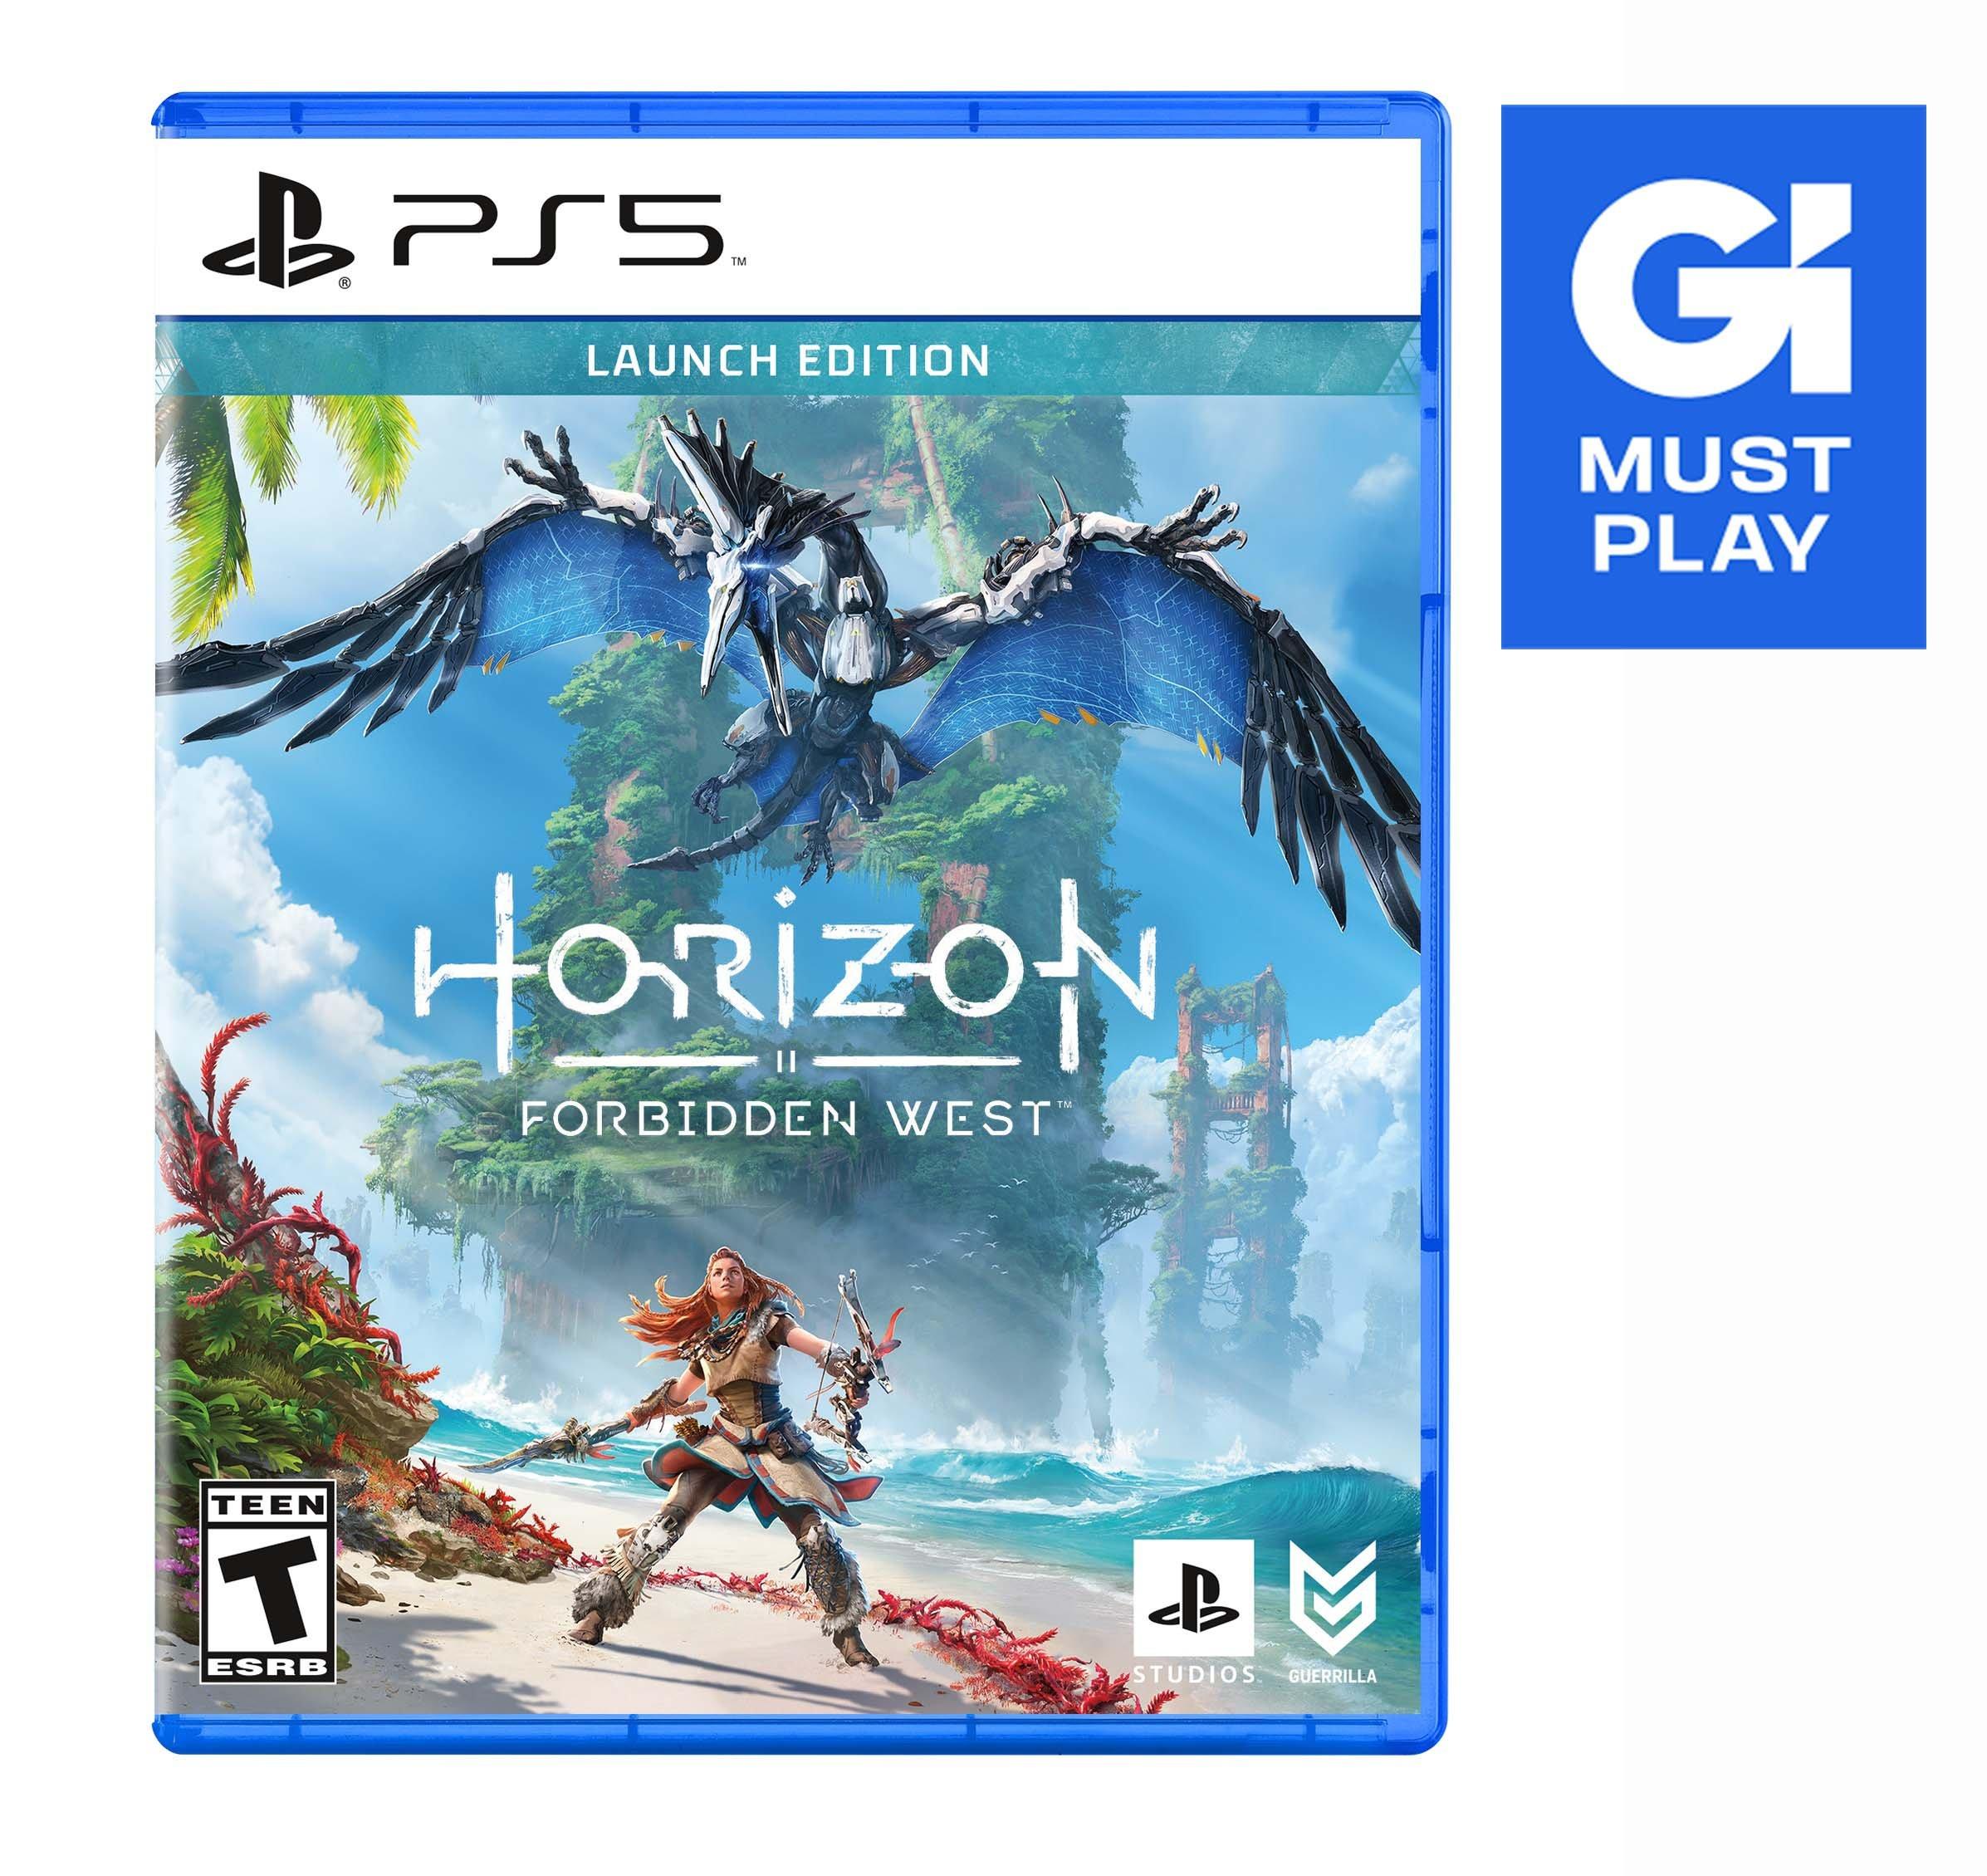 Horizon: Forbidden West PS4 Version Looks Stunning in First Screenshots